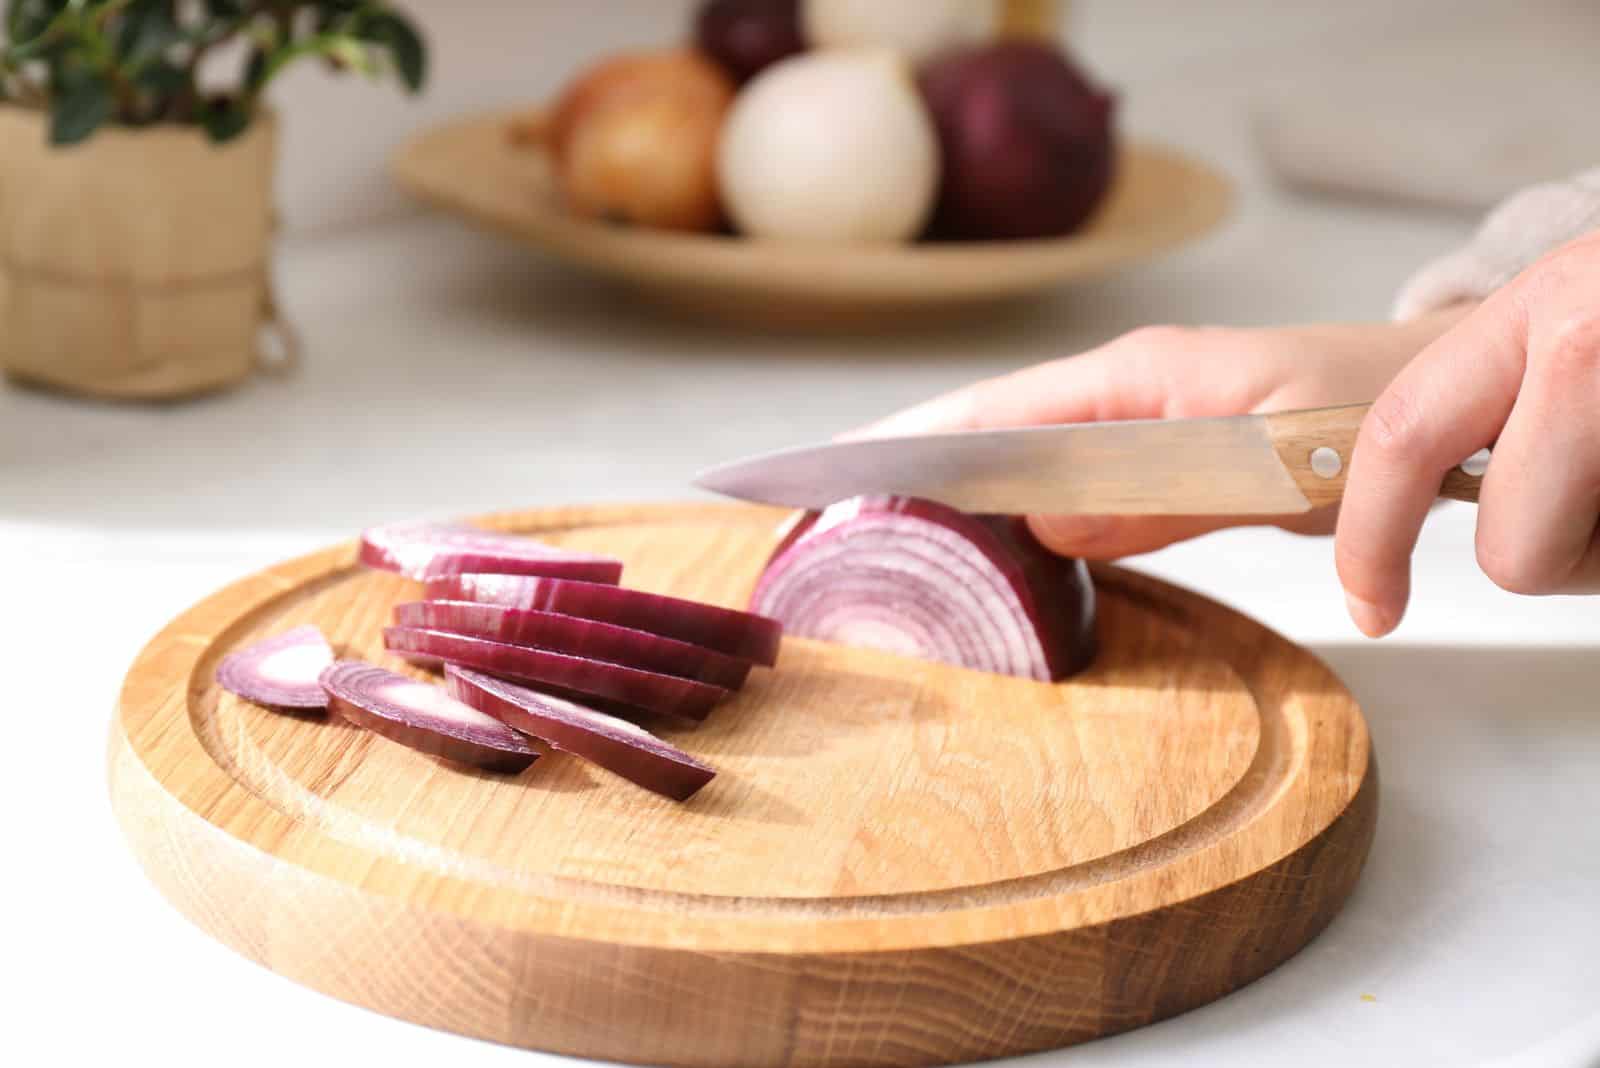 a woman cuts an onion on a cutting board